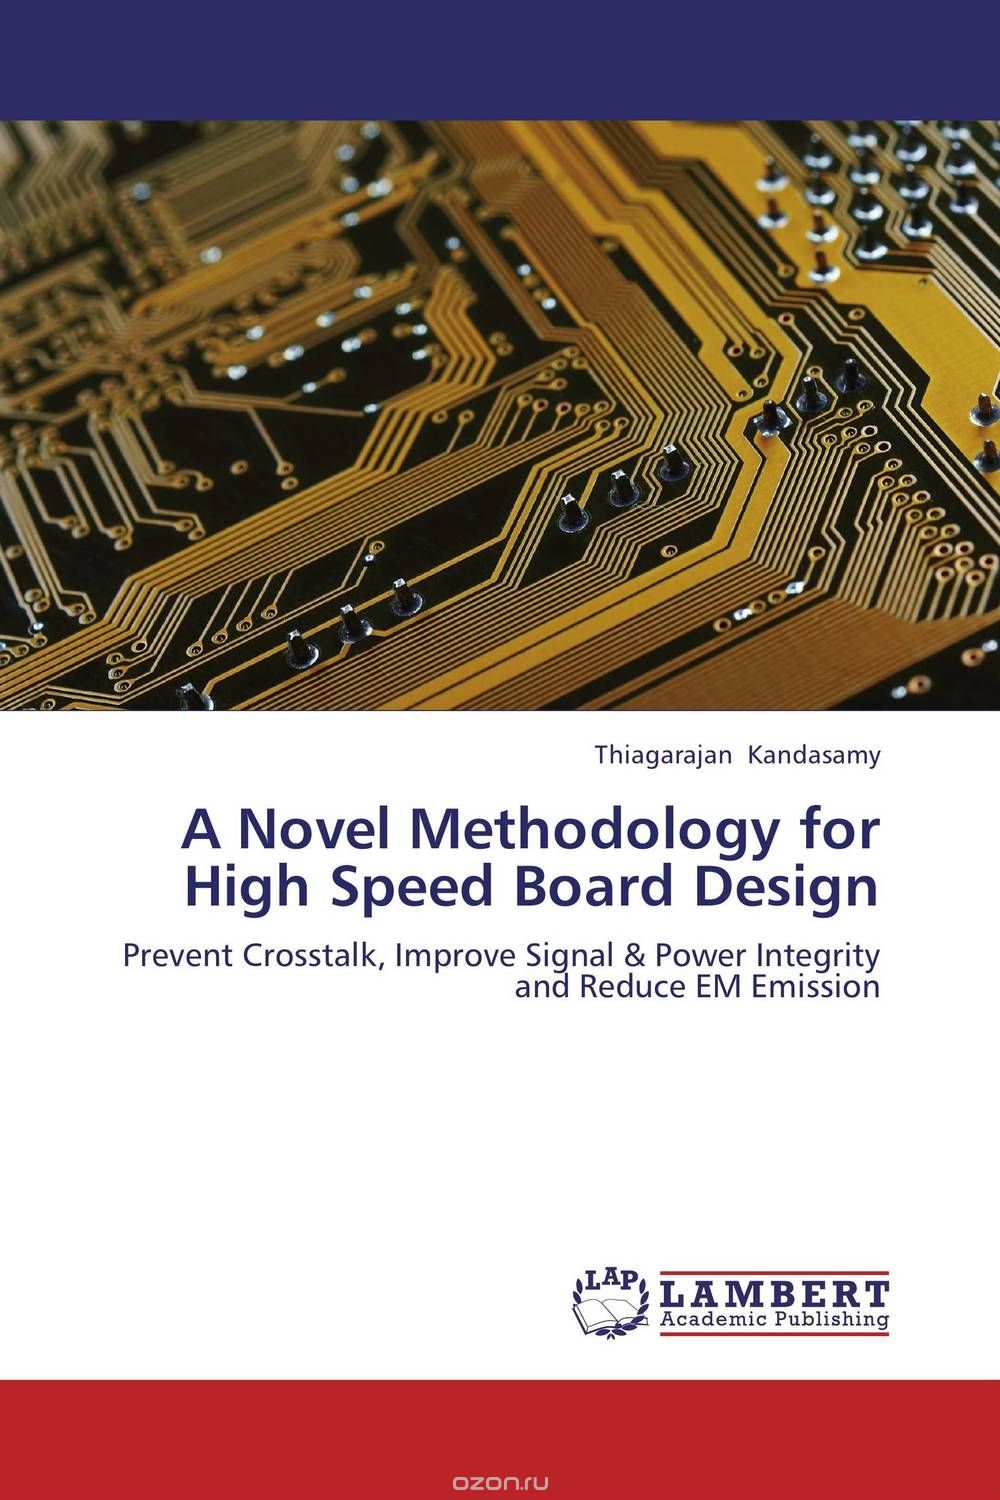 Скачать книгу "A Novel Methodology for High Speed Board Design"